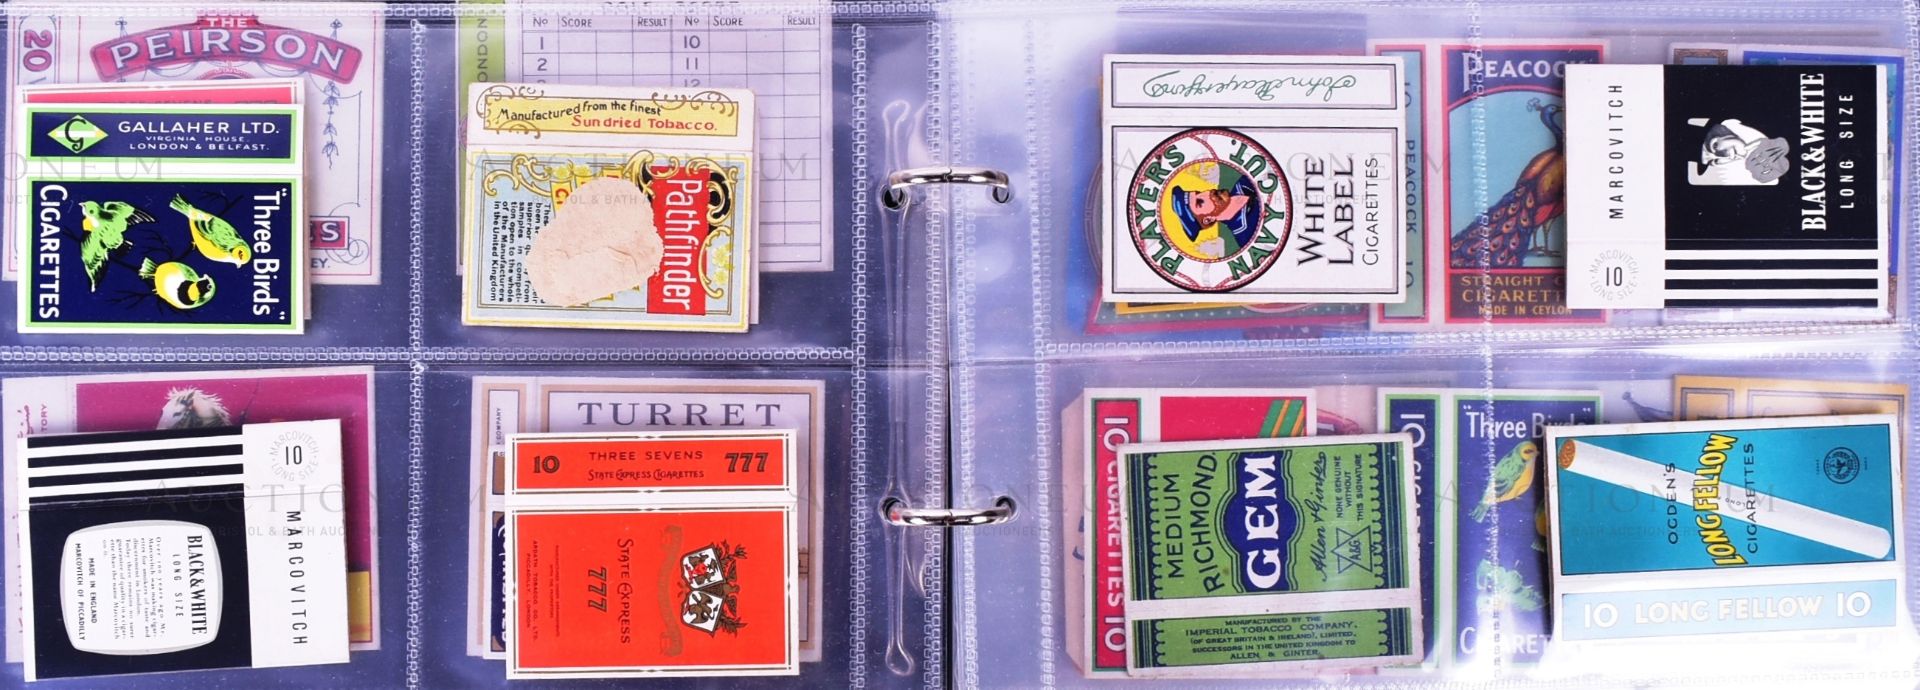 CIGARETTE PACKETS - ALBUM OF VINTAGE CIGARETTE PACKS - Image 5 of 16